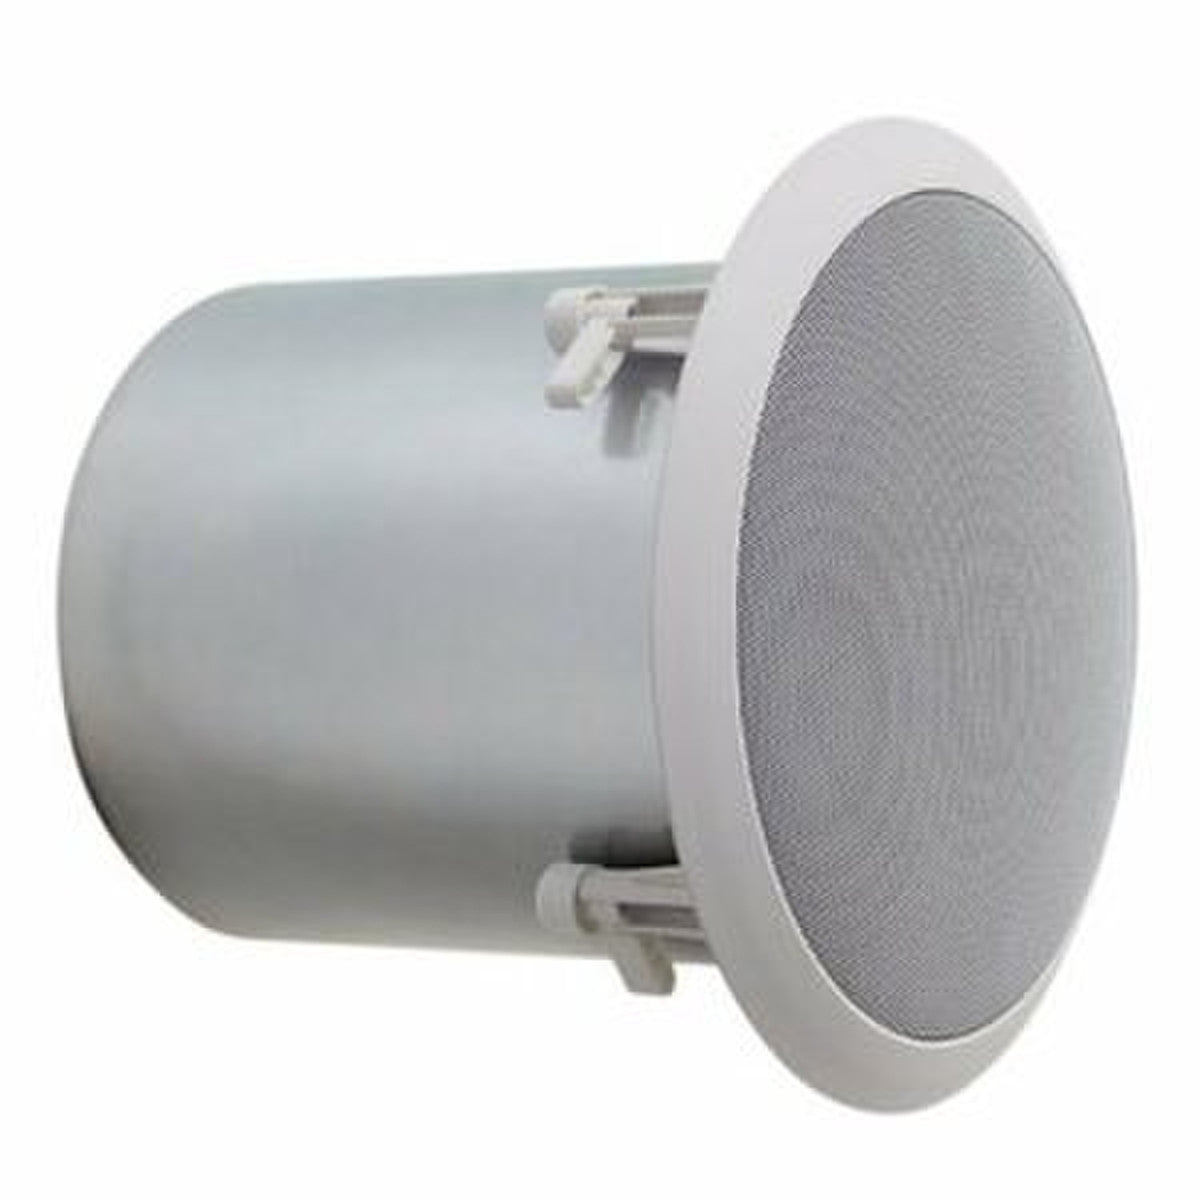 Bogen HFCS1 2-way Indoor Ceiling Mountable Speaker - Off White (HFCS1) | New